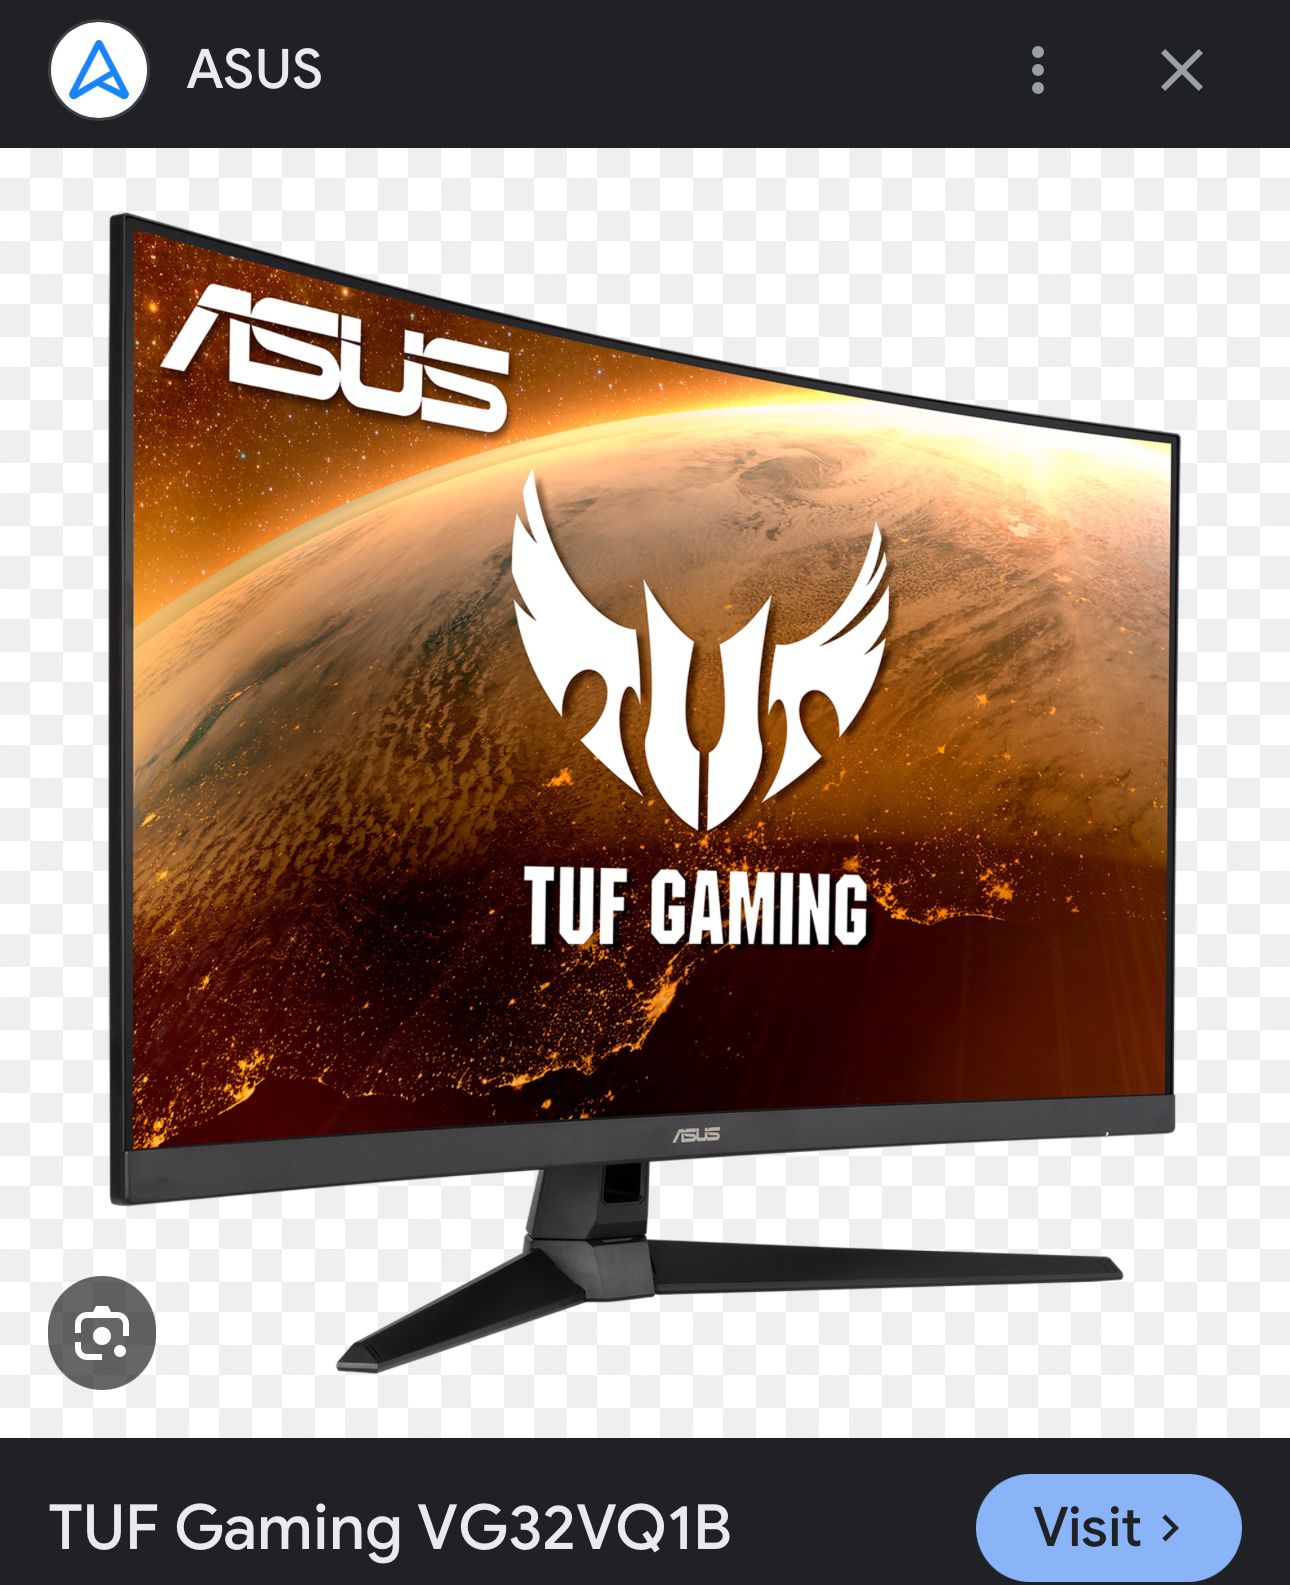 Asus Tuf Gaming curved monitor vg32vq1b